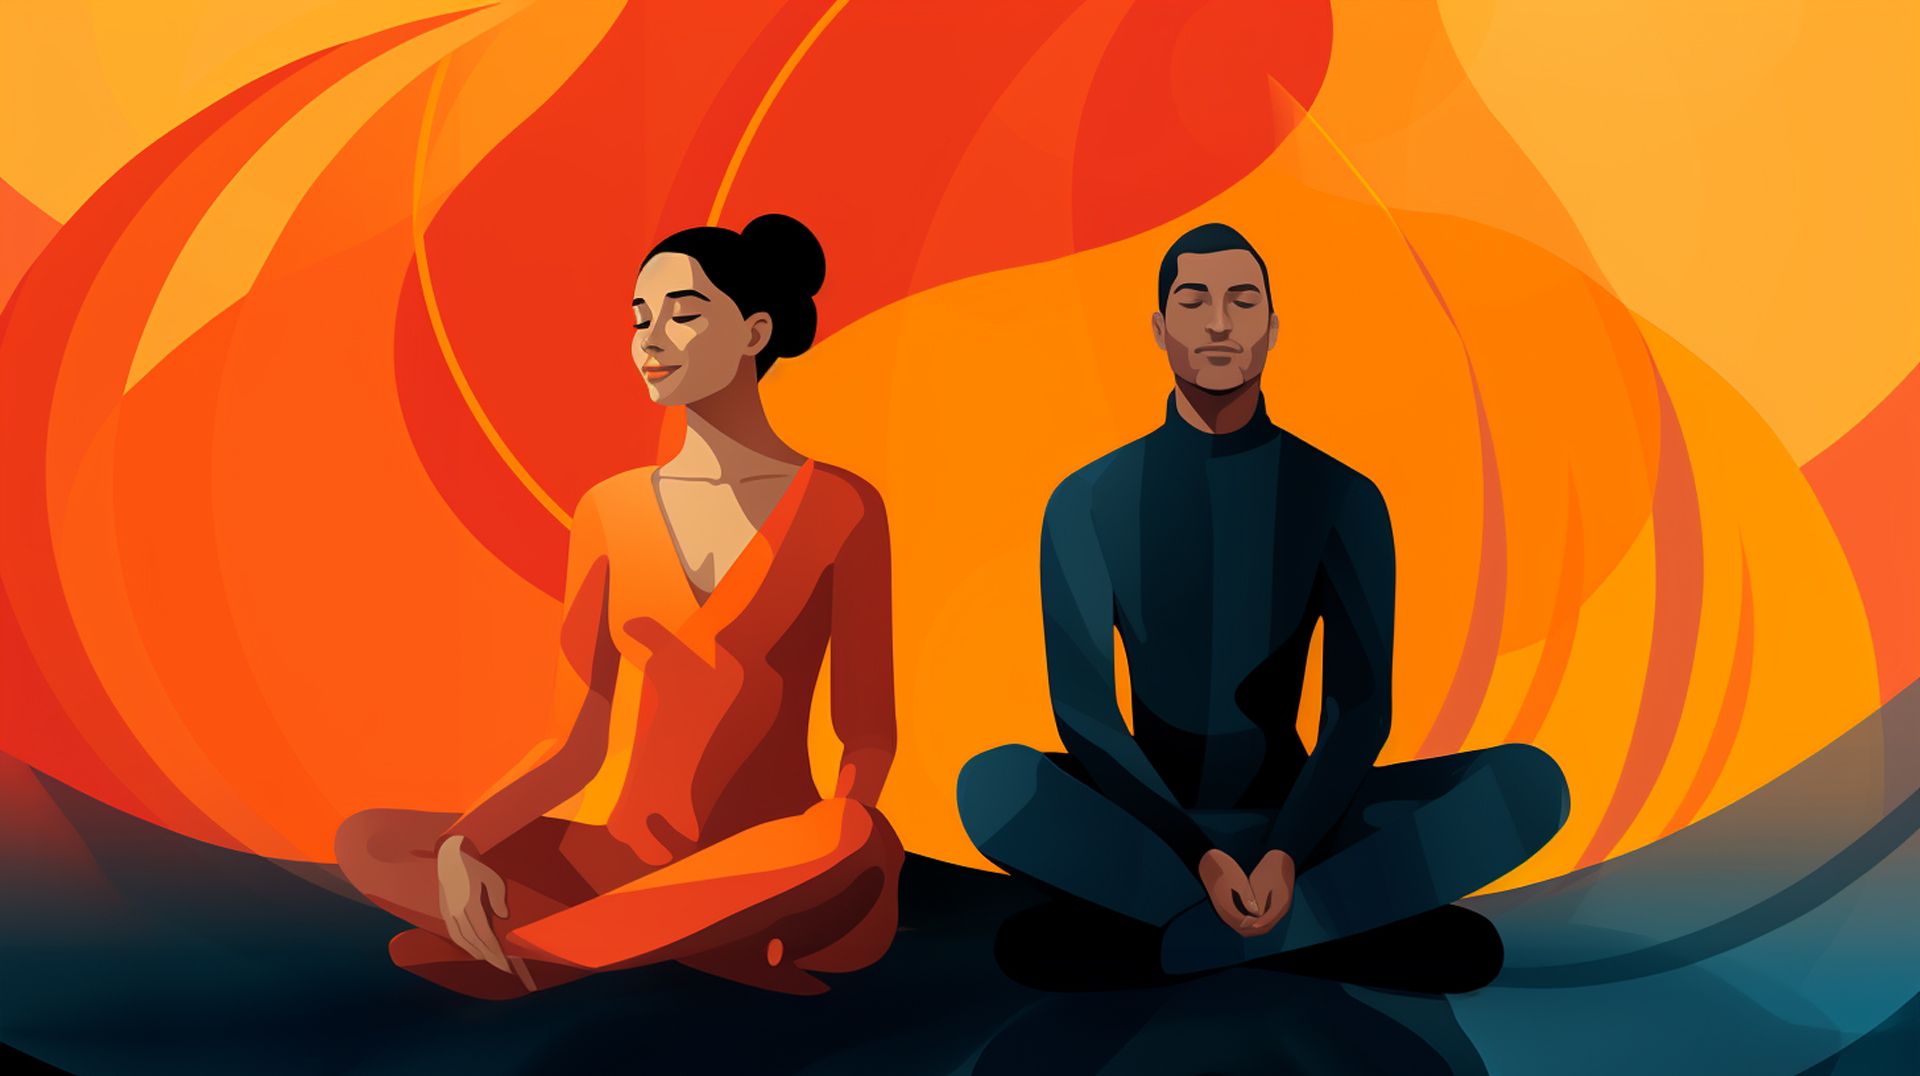 illustration of a man and woman meditating